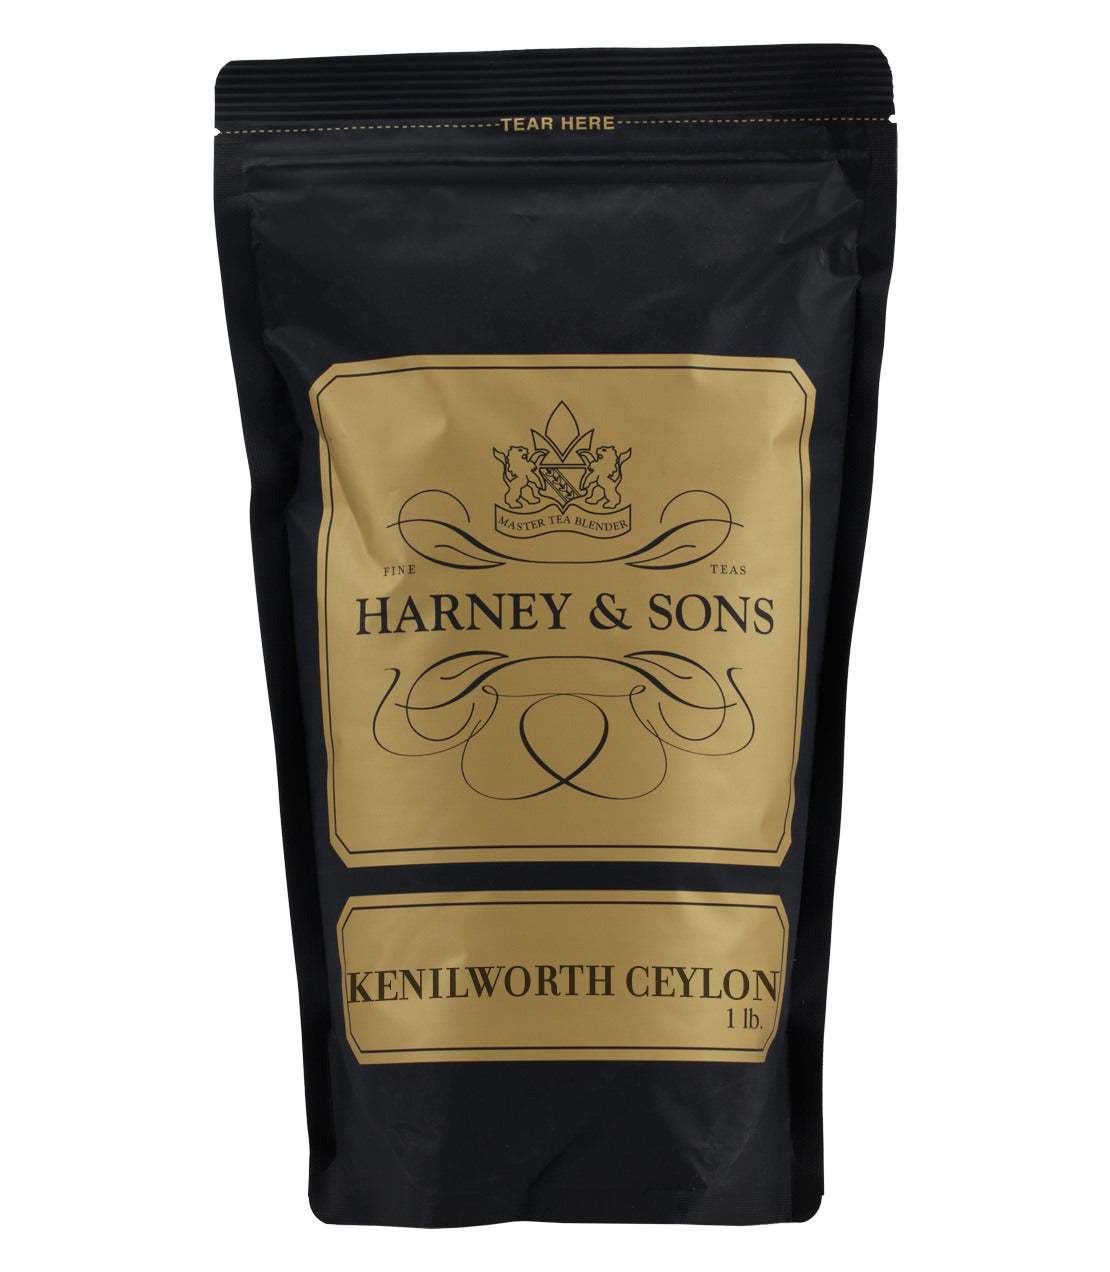 Kenilworth Ceylon - Loose 1 lb. Bag - Harney & Sons Fine Teas